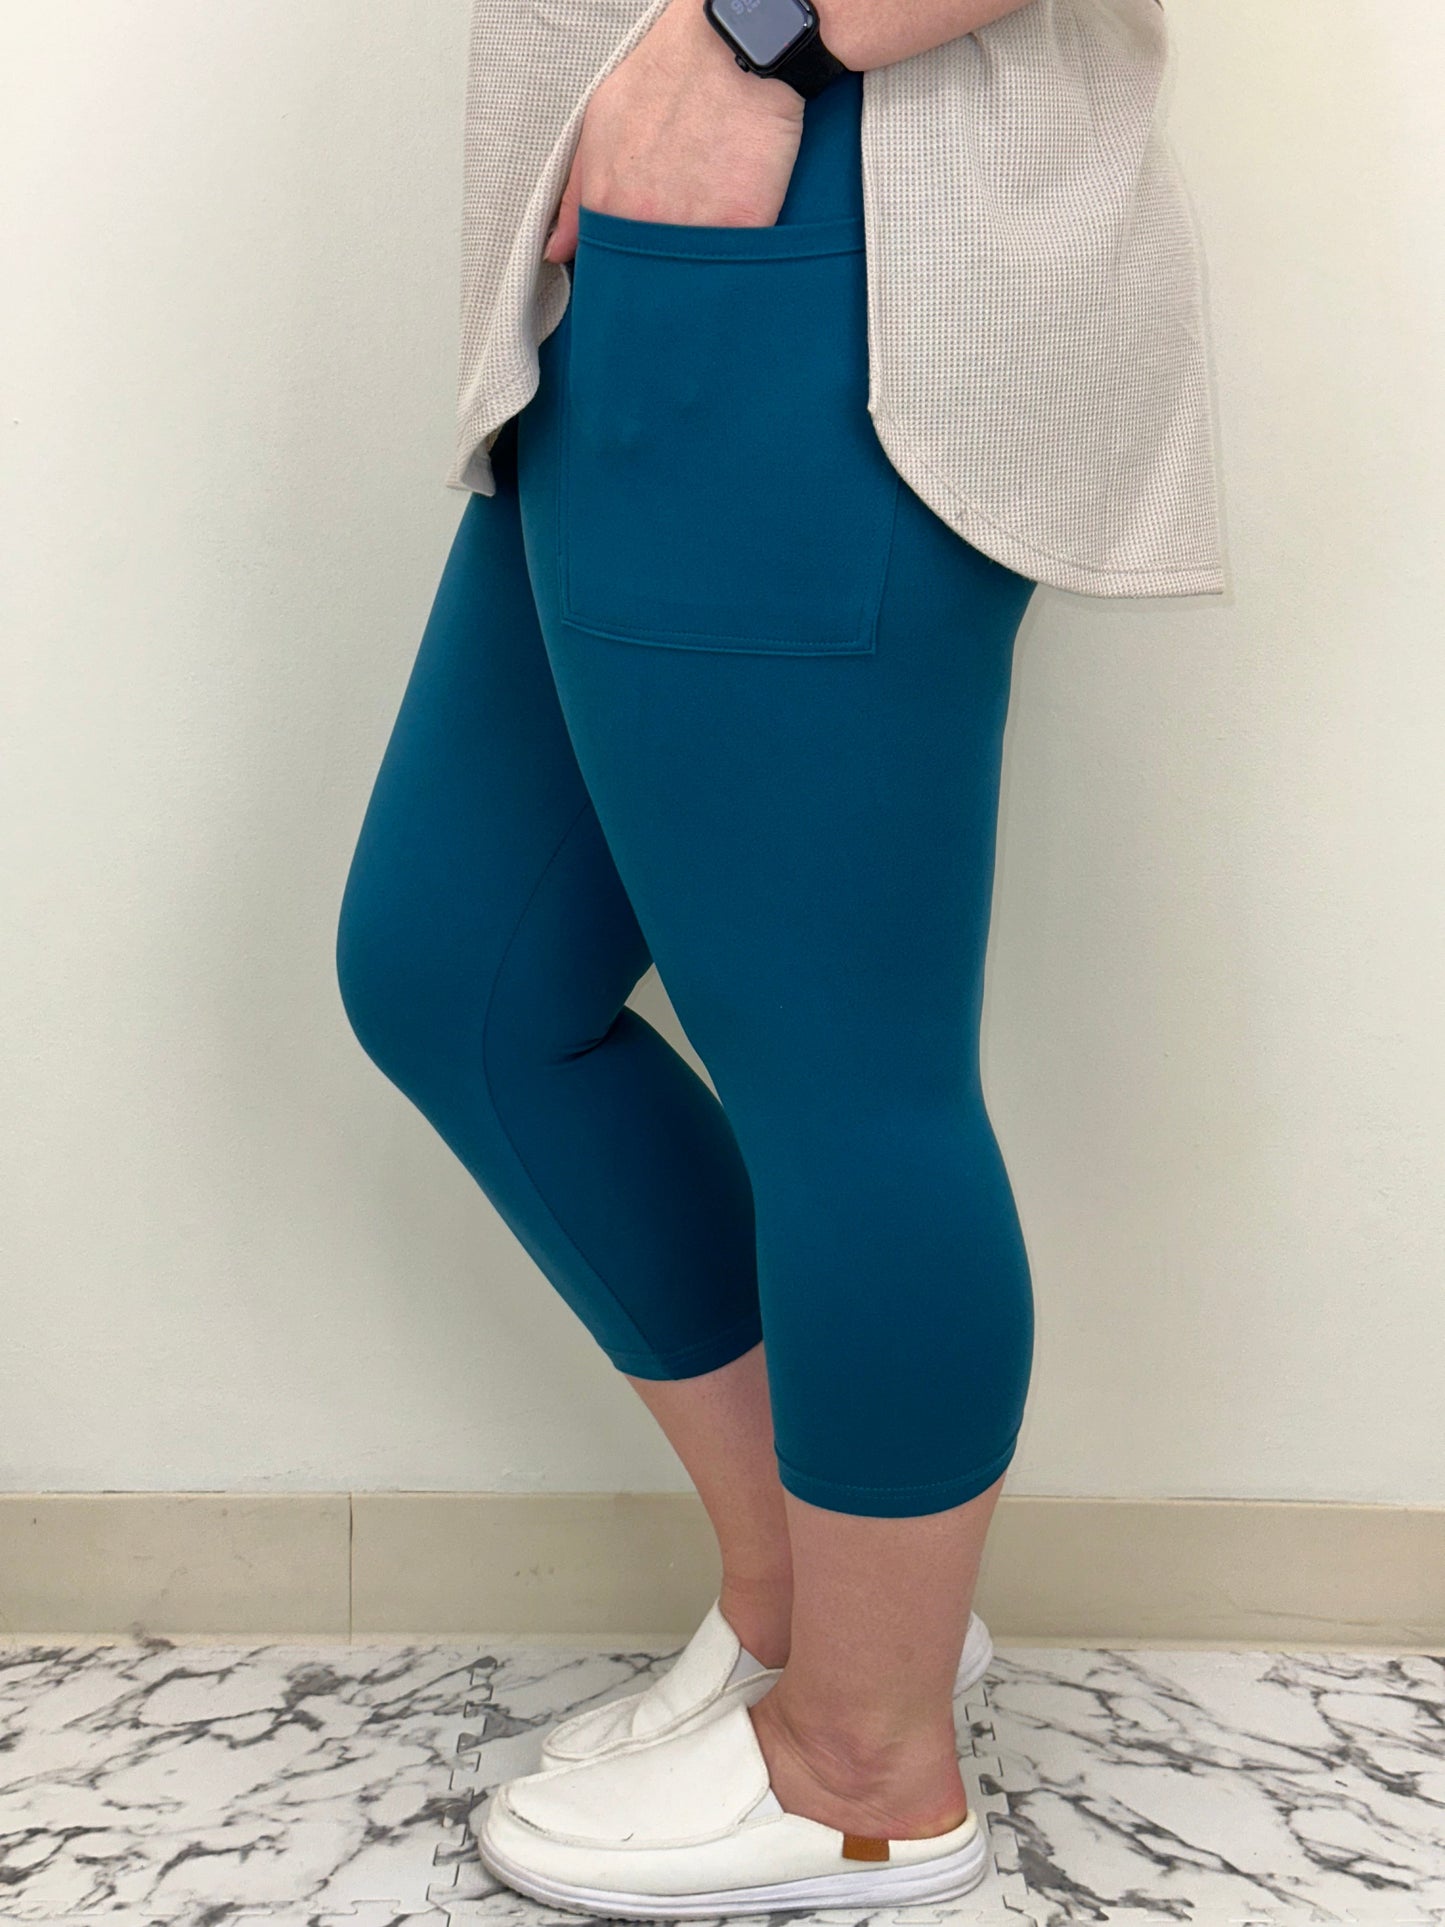 Turquoise Capri Leggings w/ Pockets